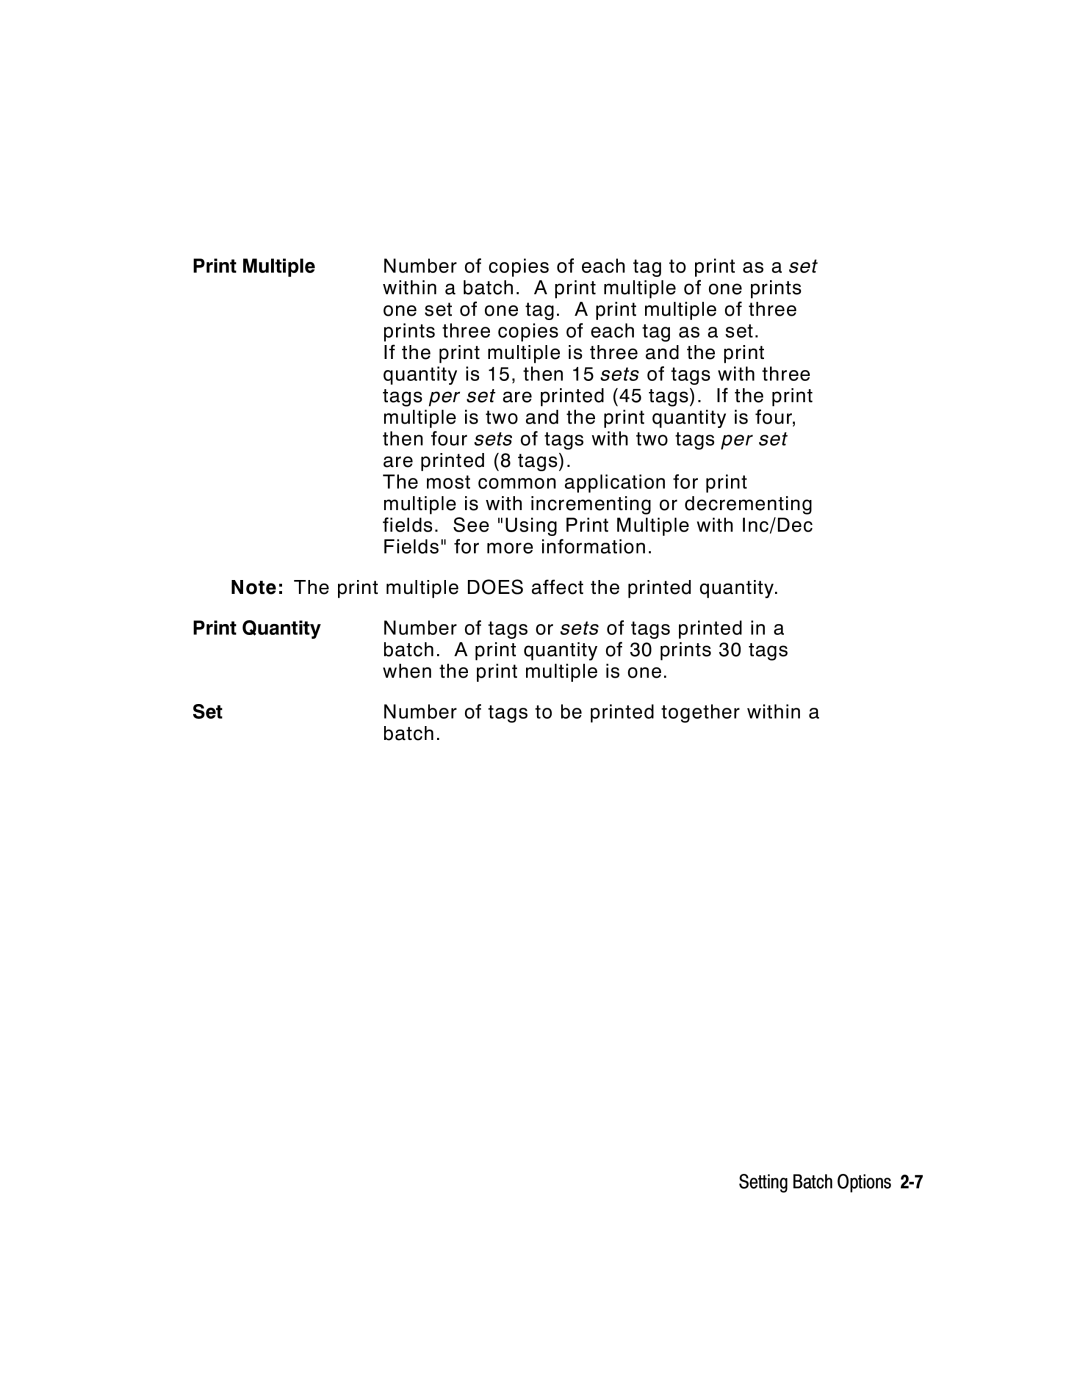 Paxar 939 manual 